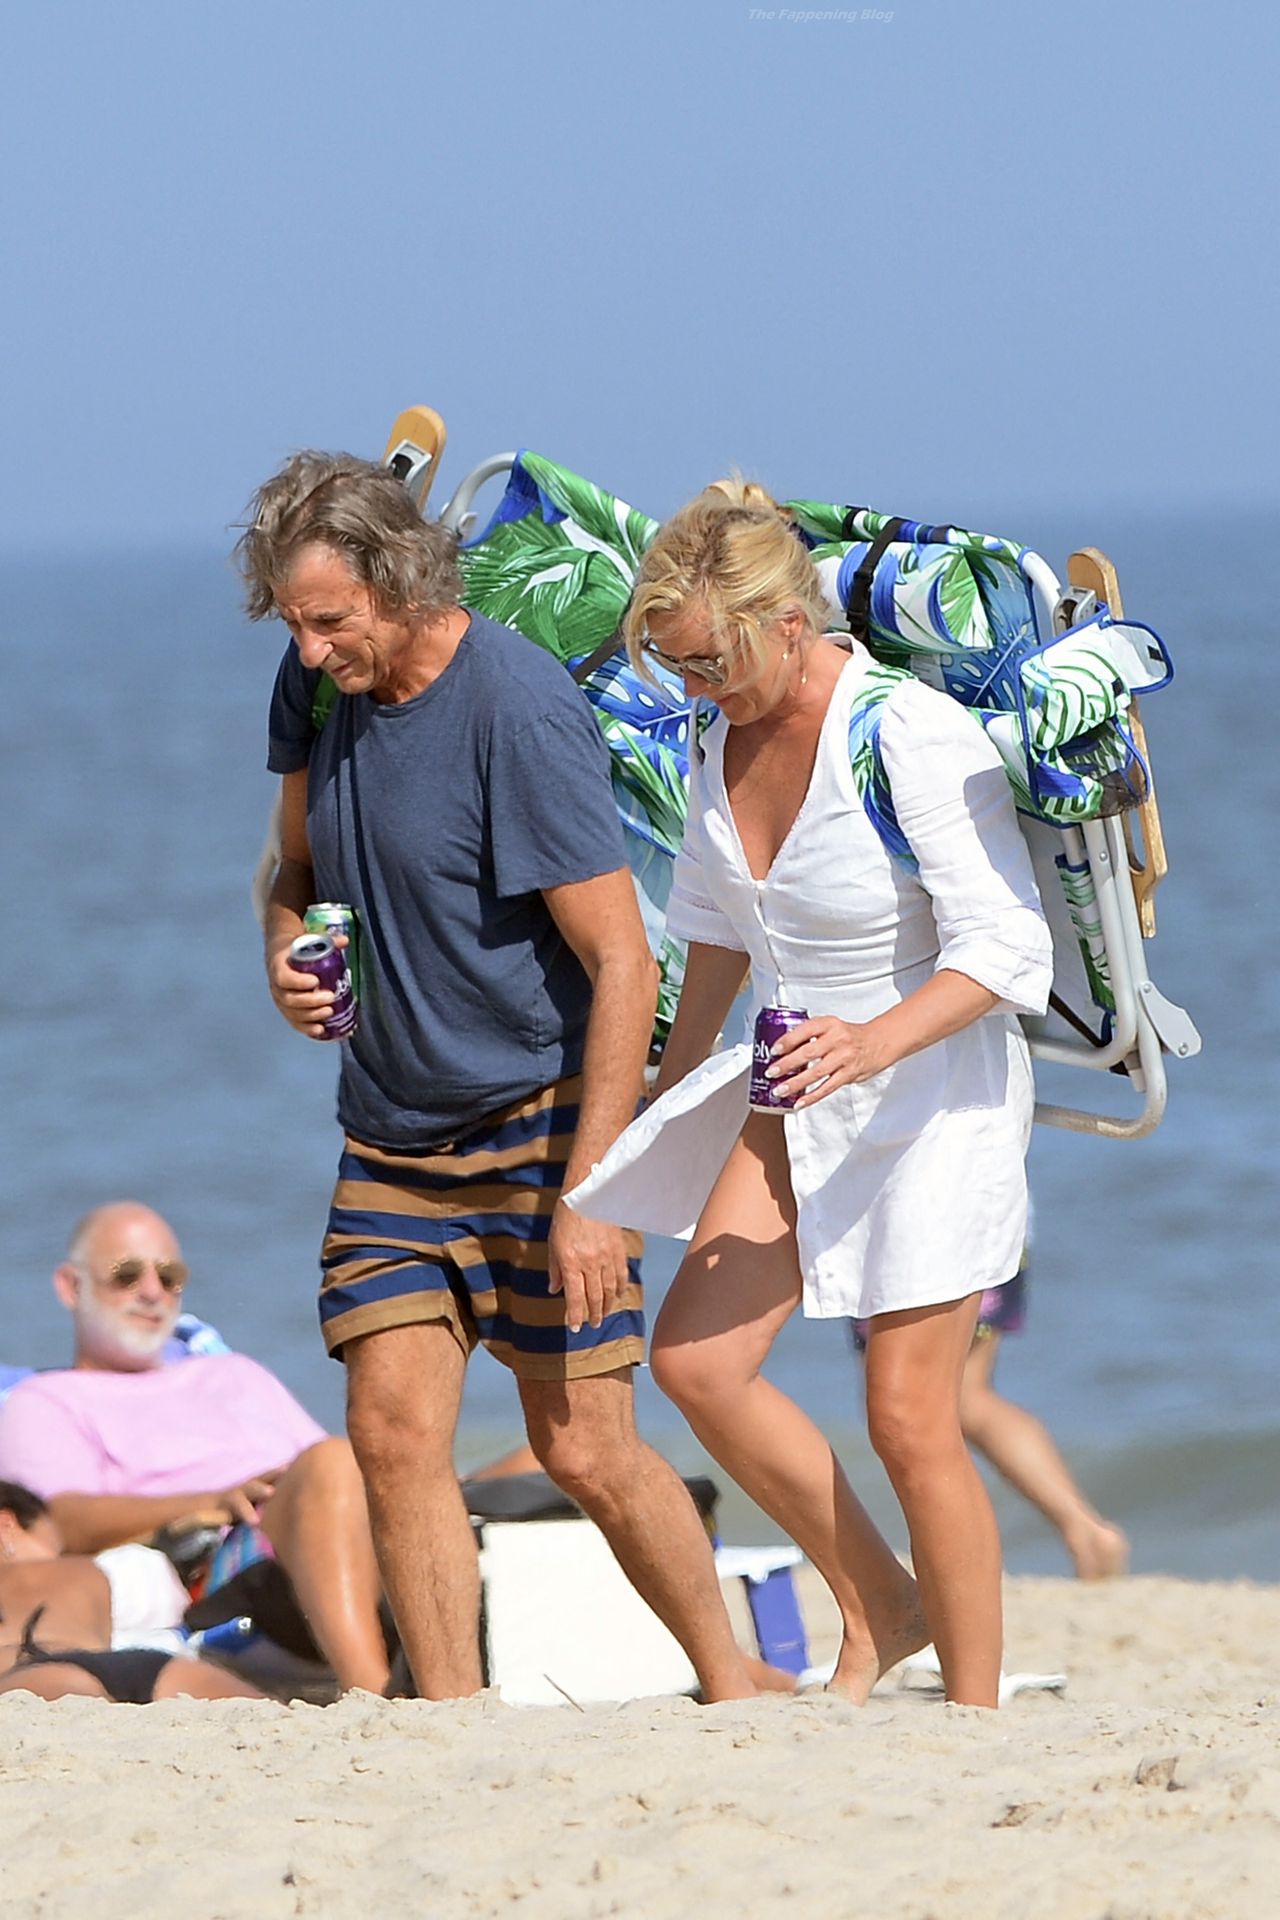 Jane Krakowski Spends Quality Time at the Beach with Her Boyfriend David Rockwell (71 Photos)